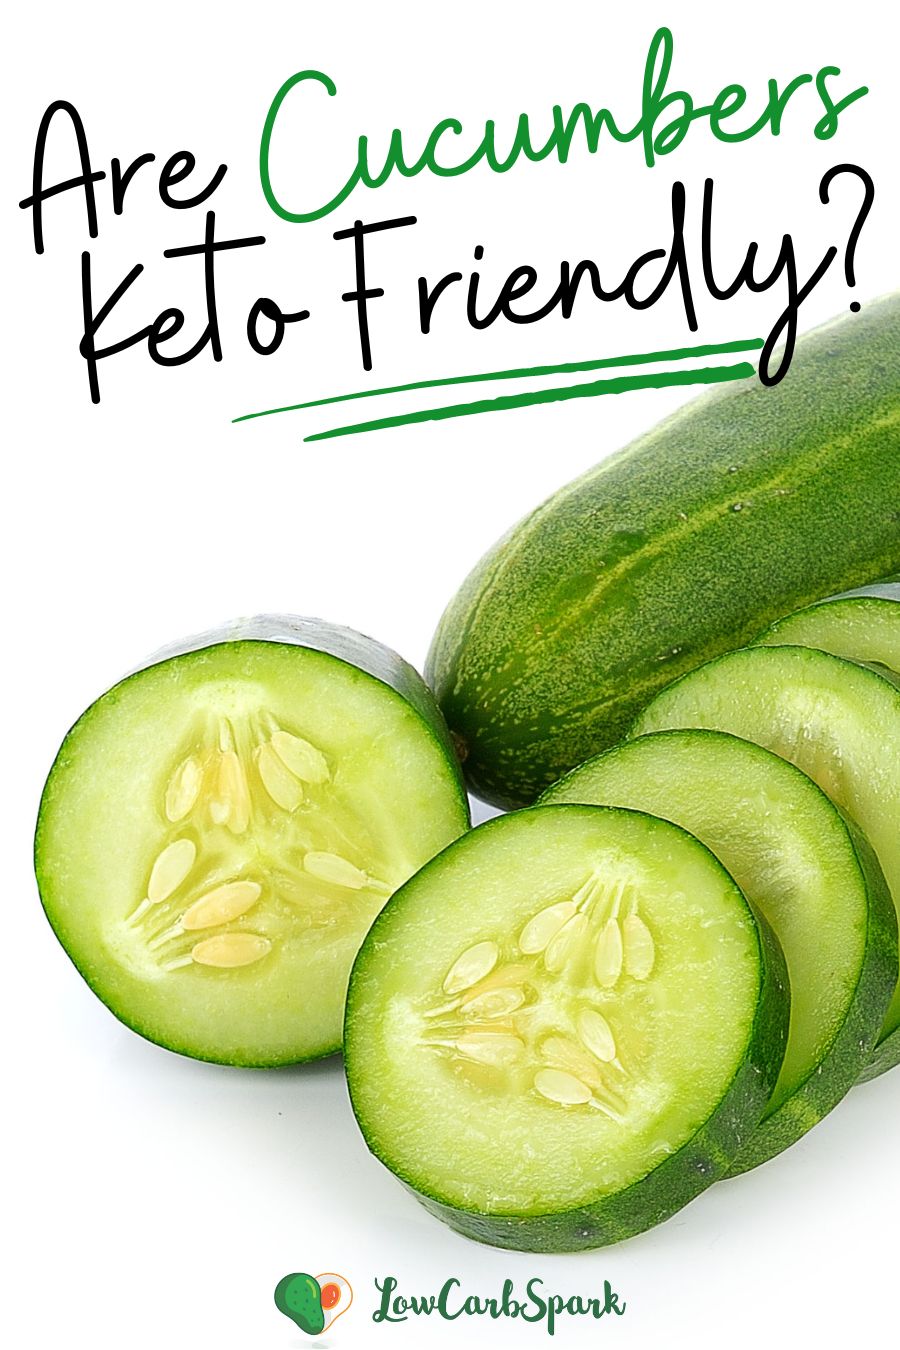 Are Cucumbers Keto?
